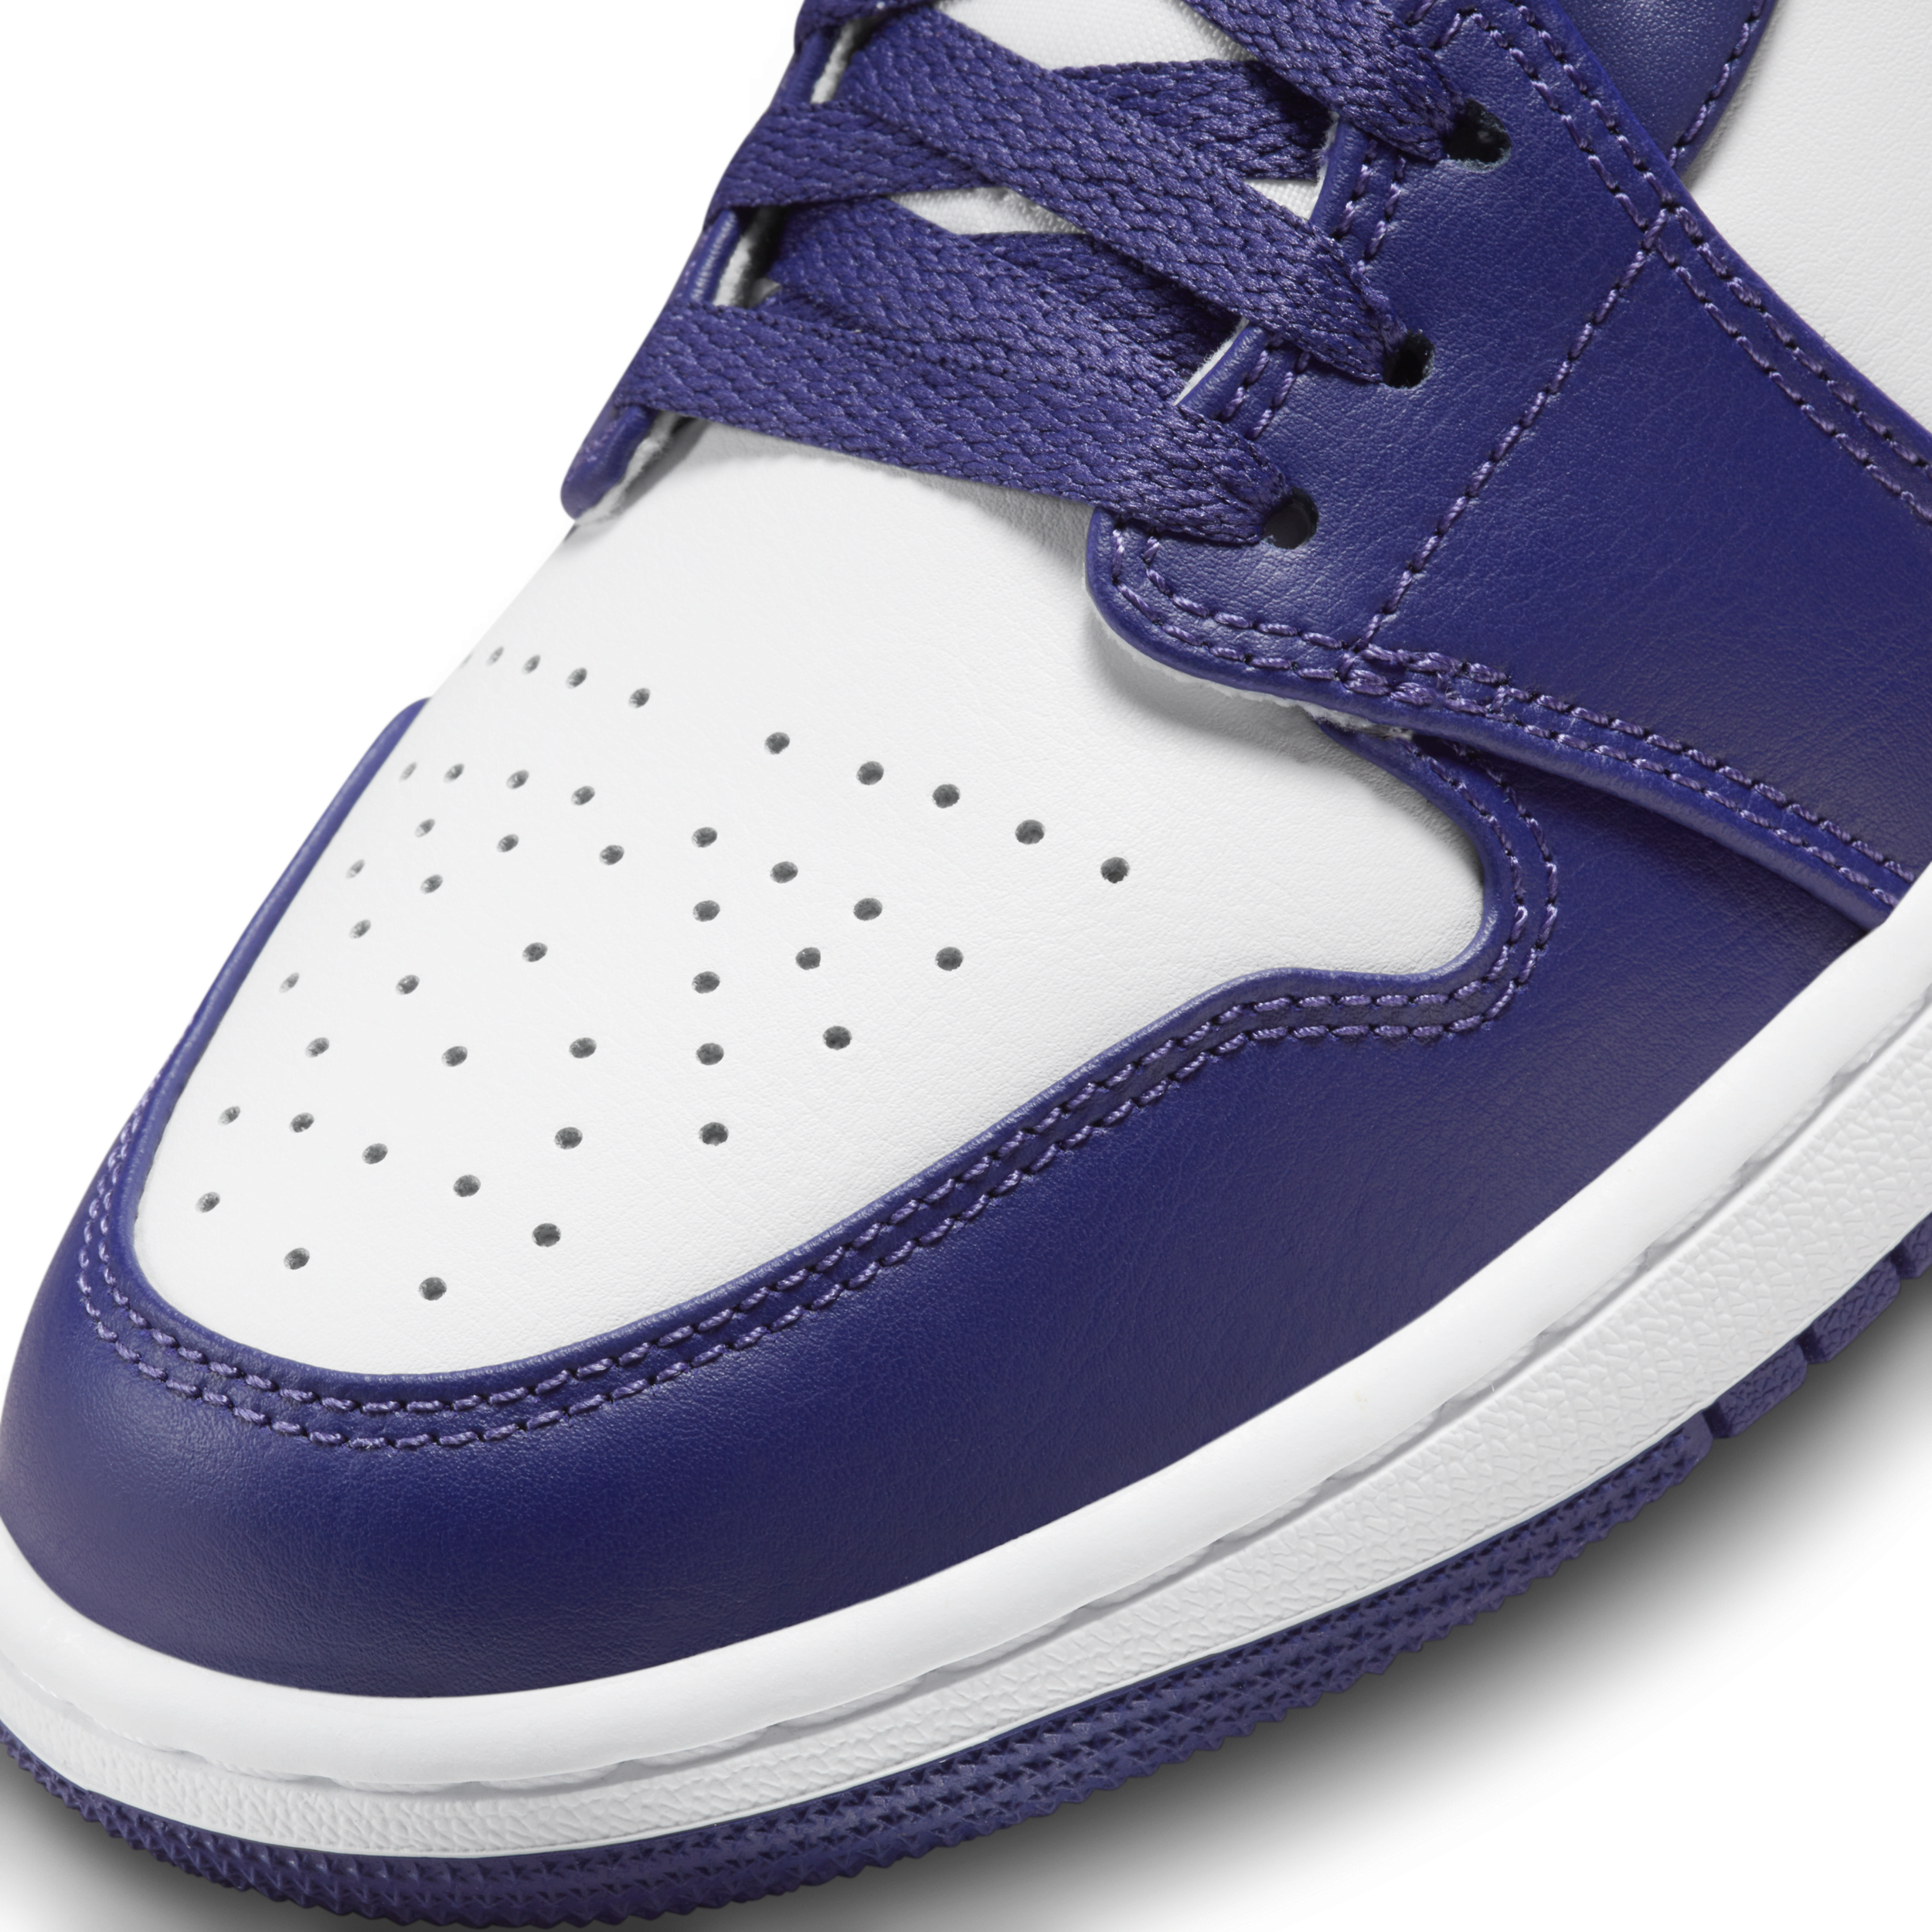 Nike Air Jordan 1 Mid AJ1 Men Casual LifeStyle Sneakers Street Style Shoe  Pick 1